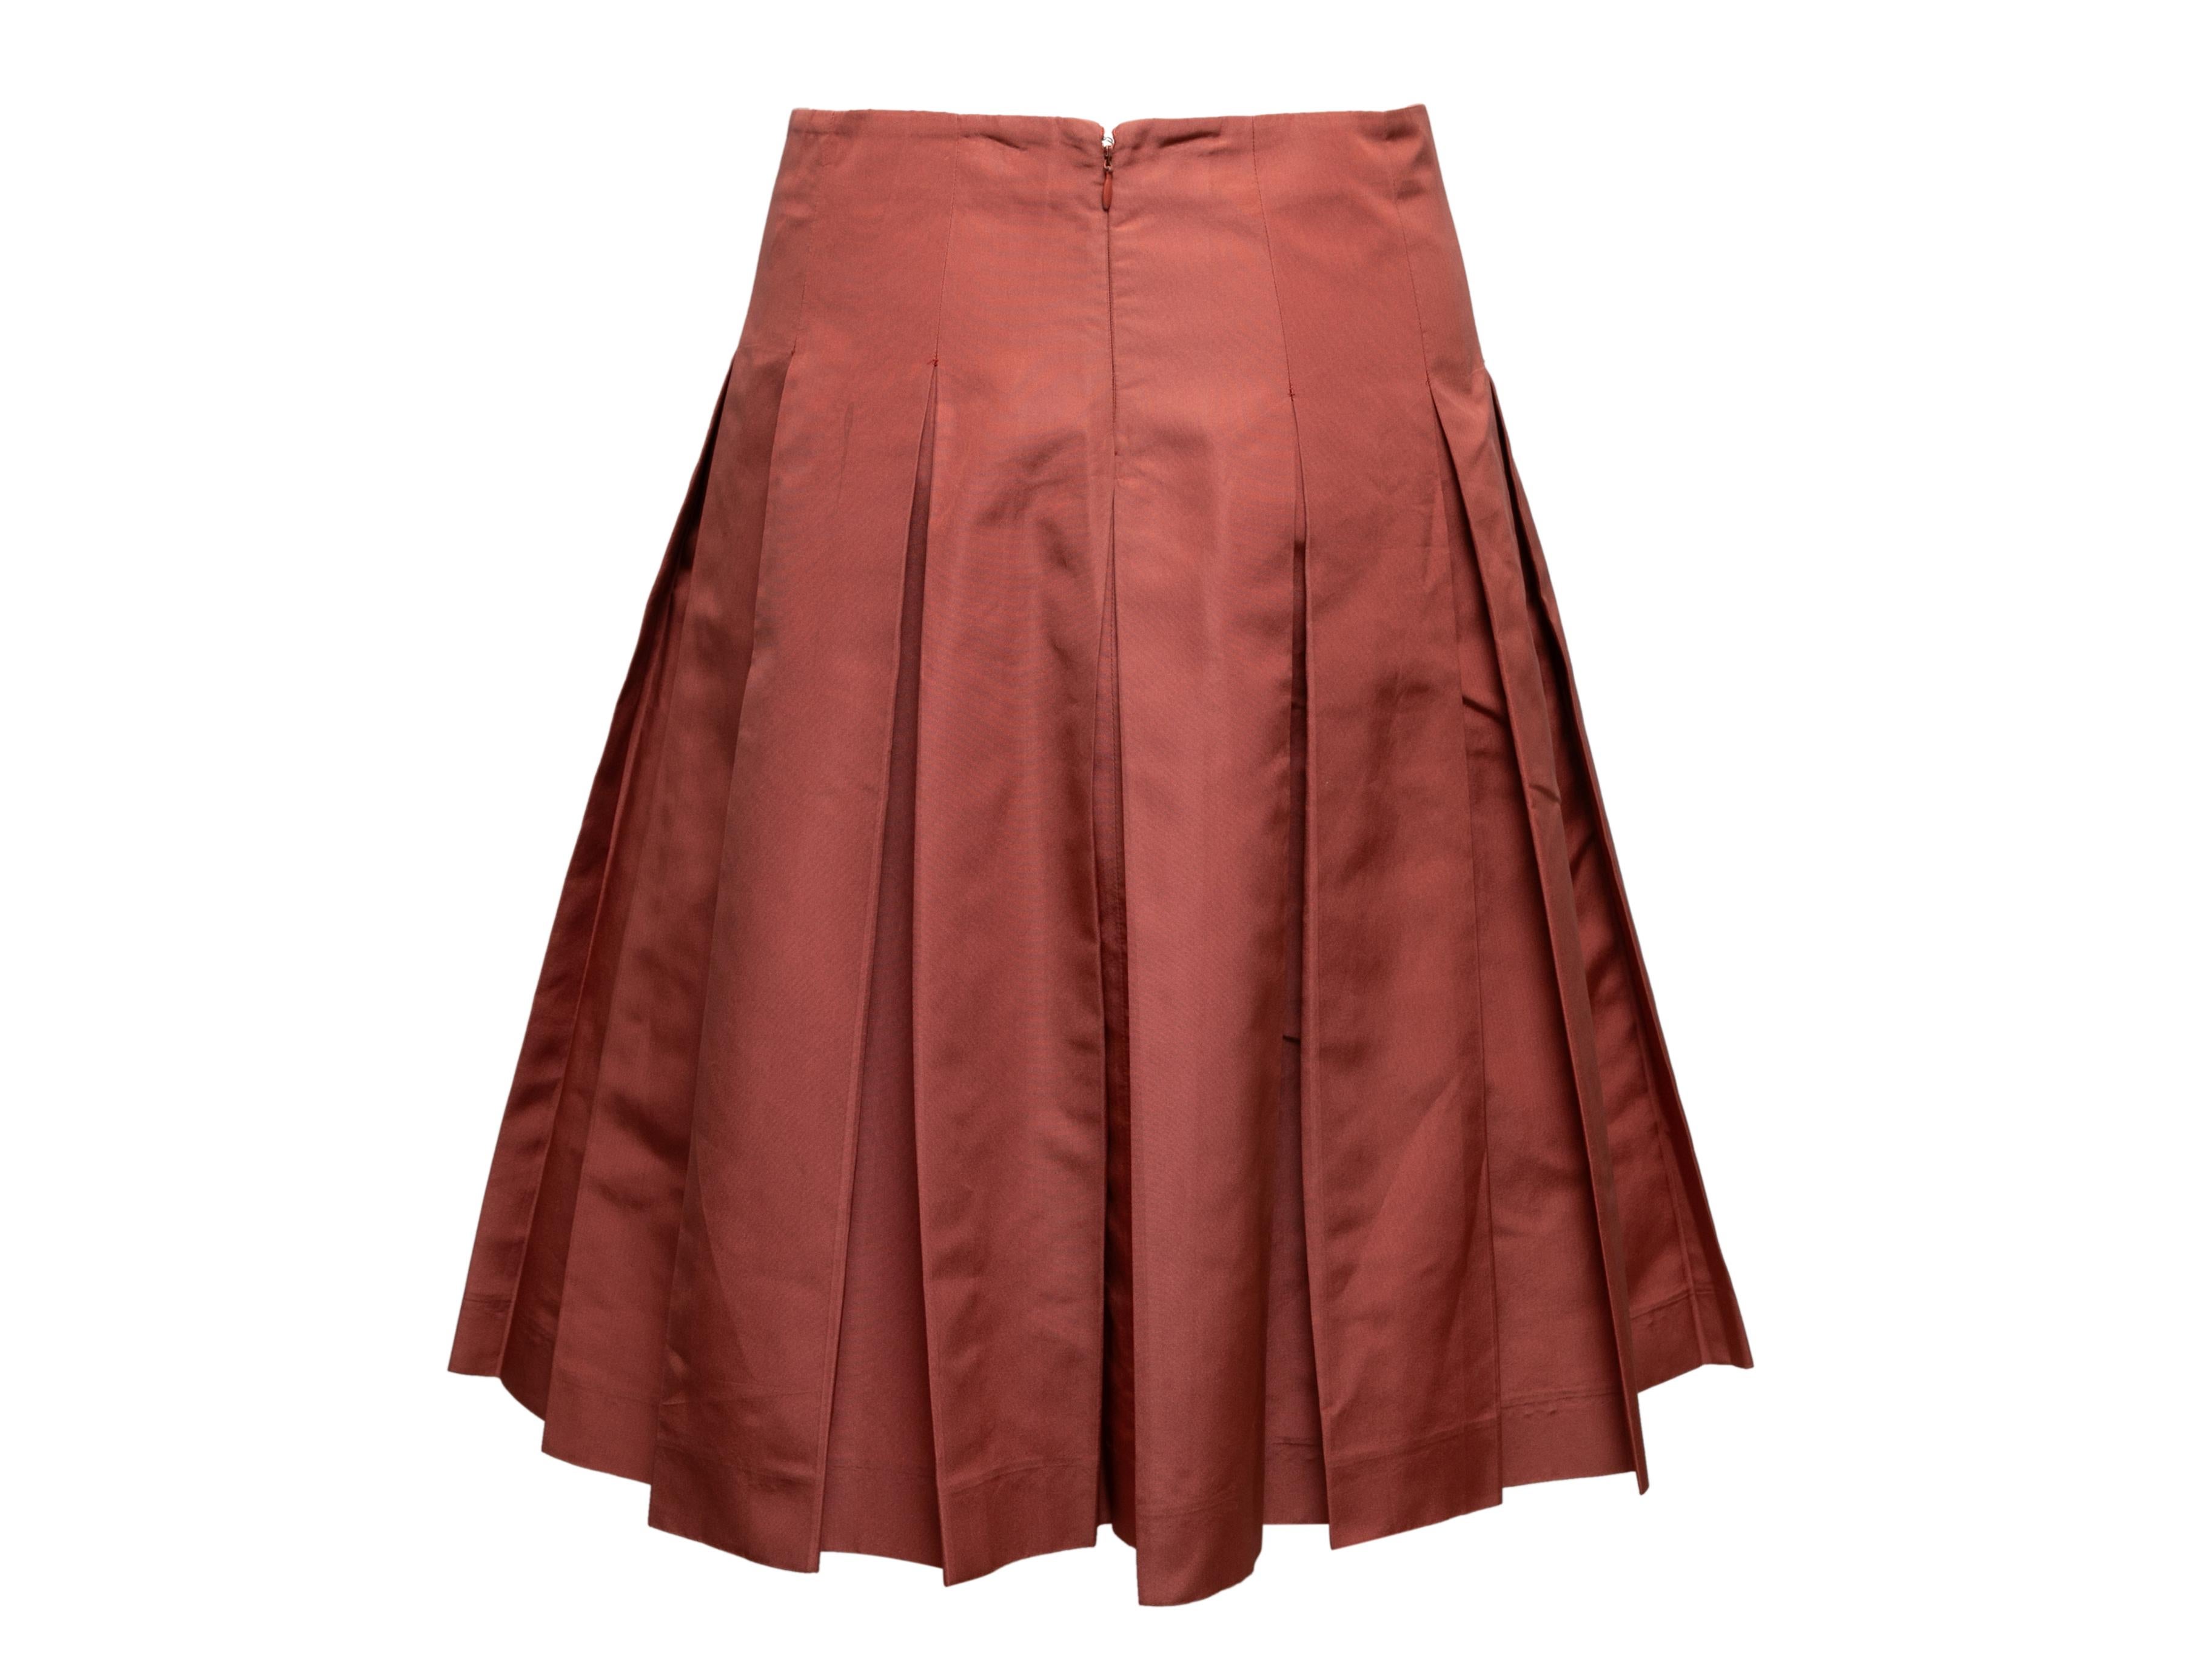 Salmon silk pleated skirt by Prada. Zip closure at center back. 28.5